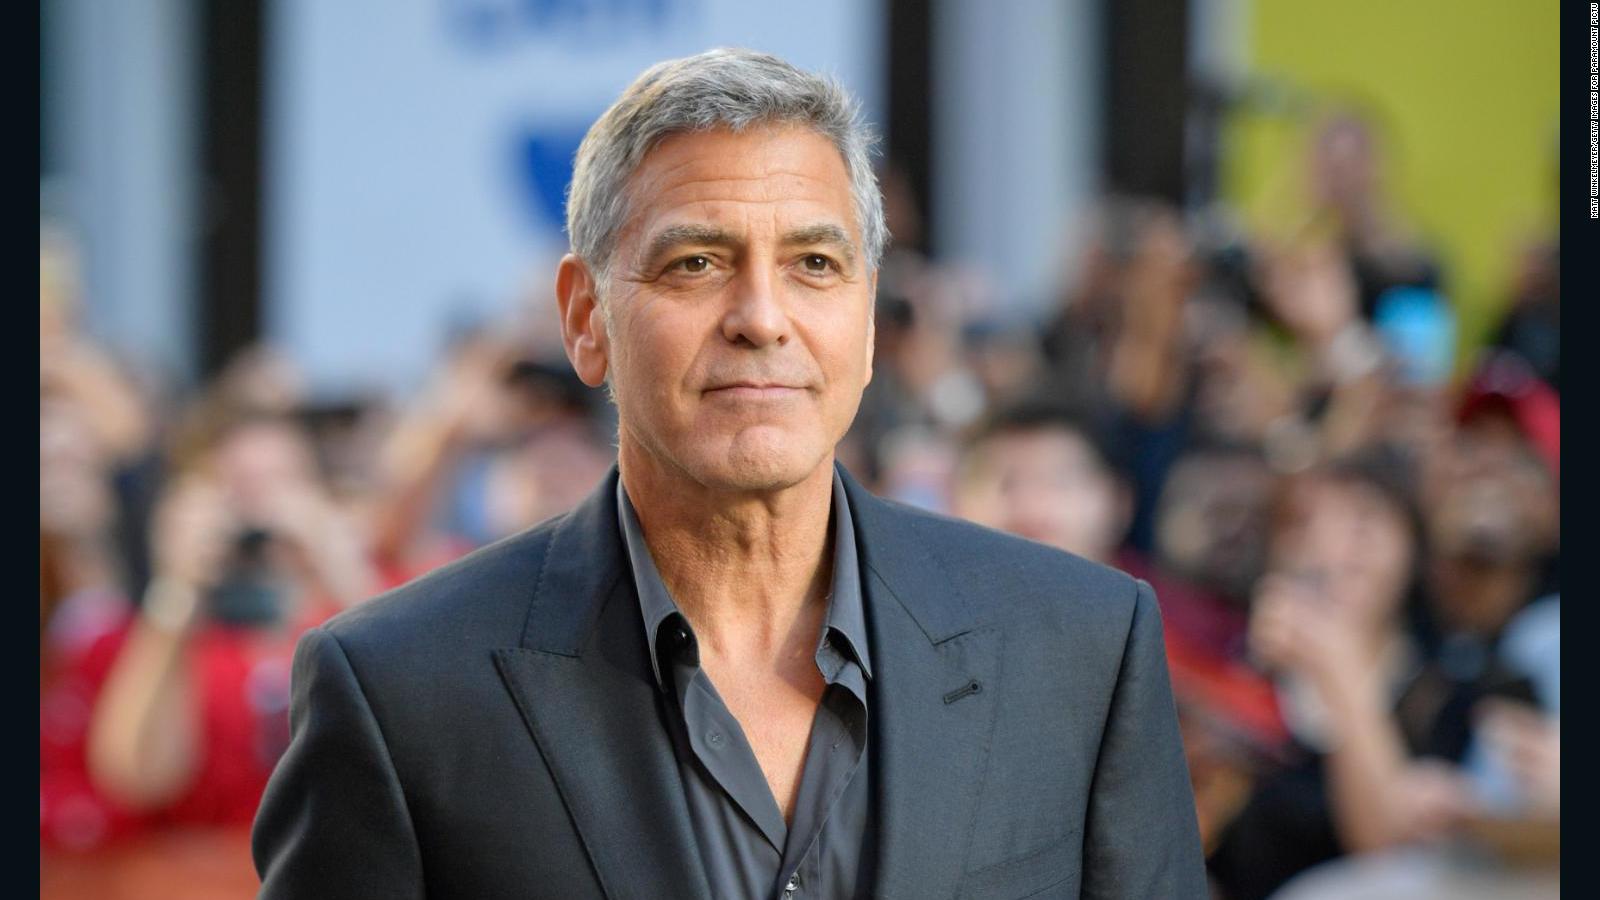 George Clooney Haircut